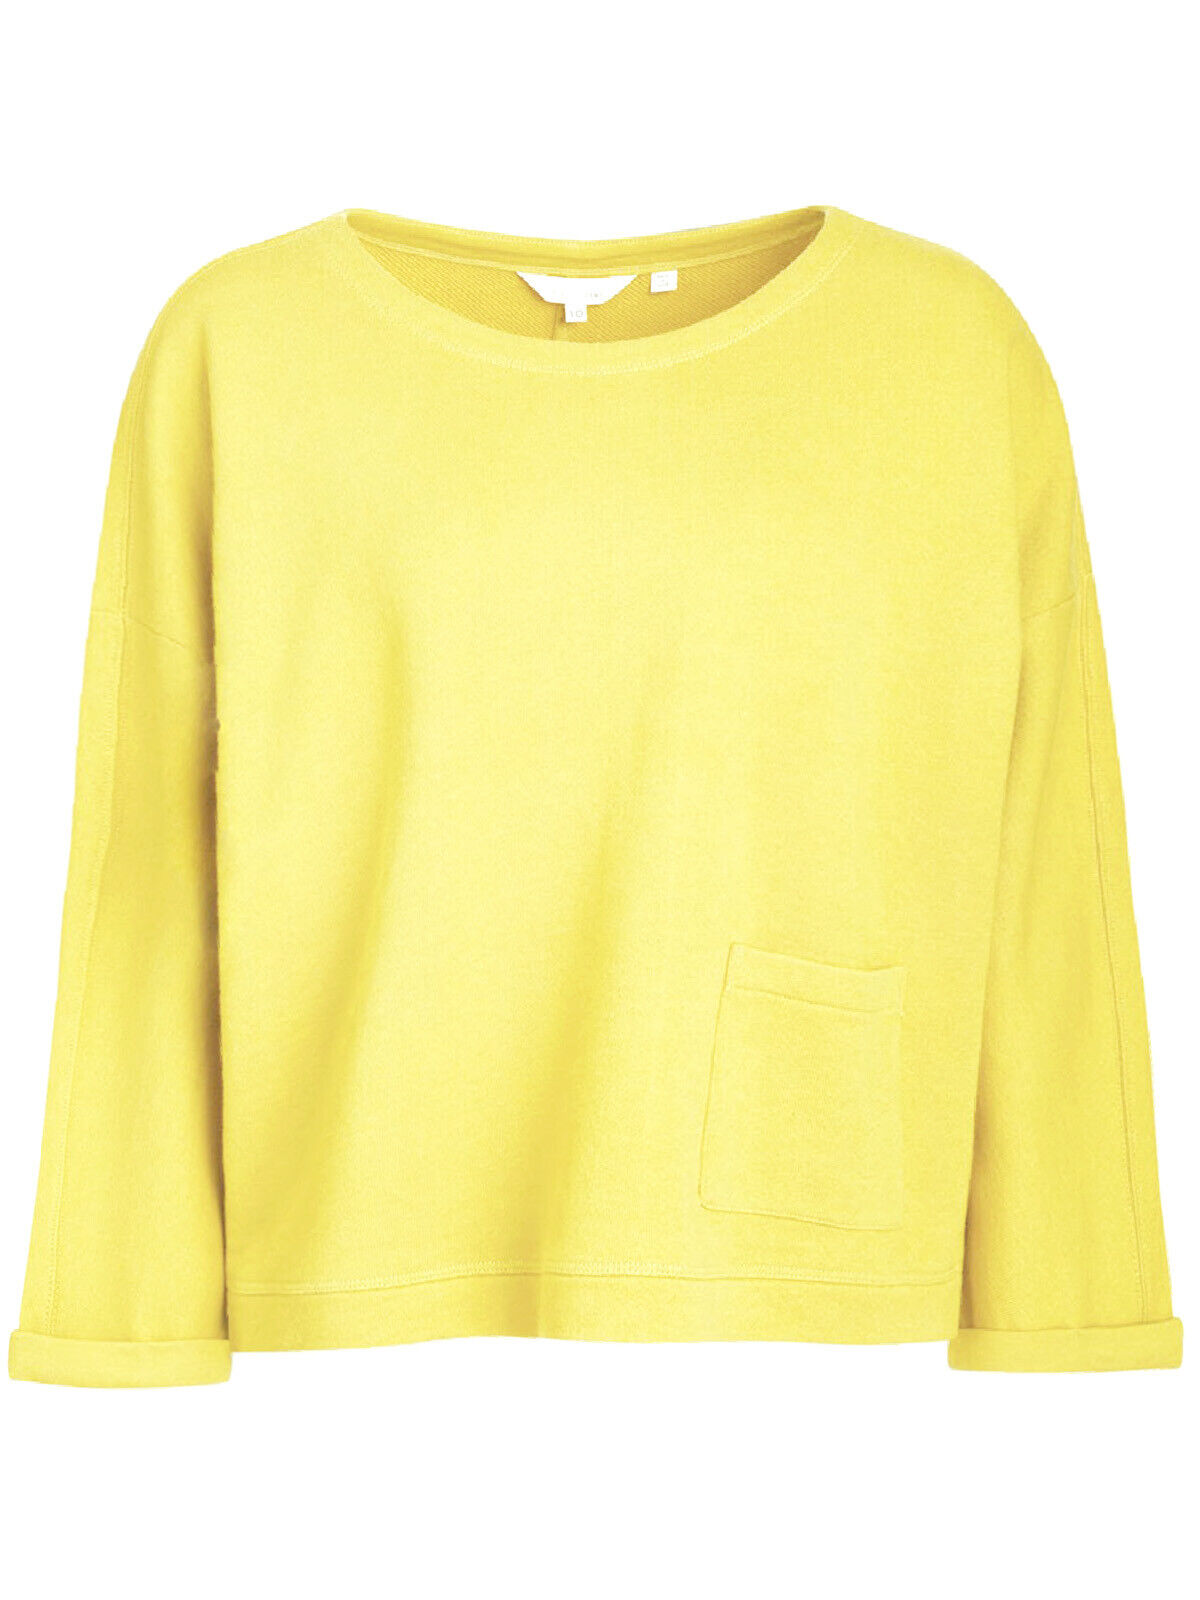 EX SEASALT Lemon Skylight Sweatshirt OVERSIZED SHORTER LENGTH Sizes 14 16 22 24